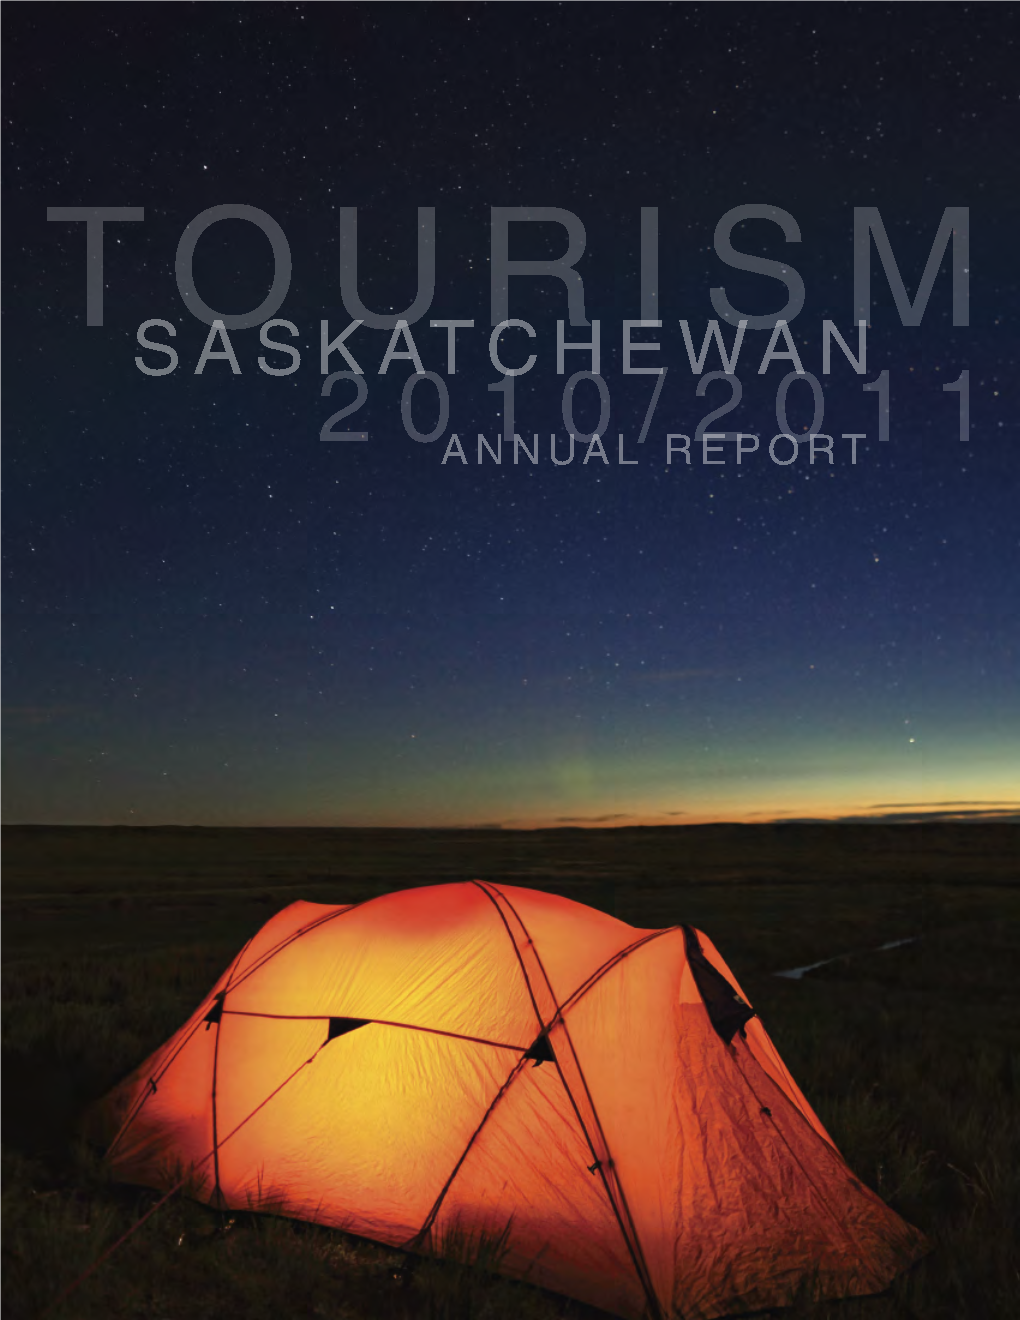 Tourism Saskatchewan 2010-2011 Annual Report